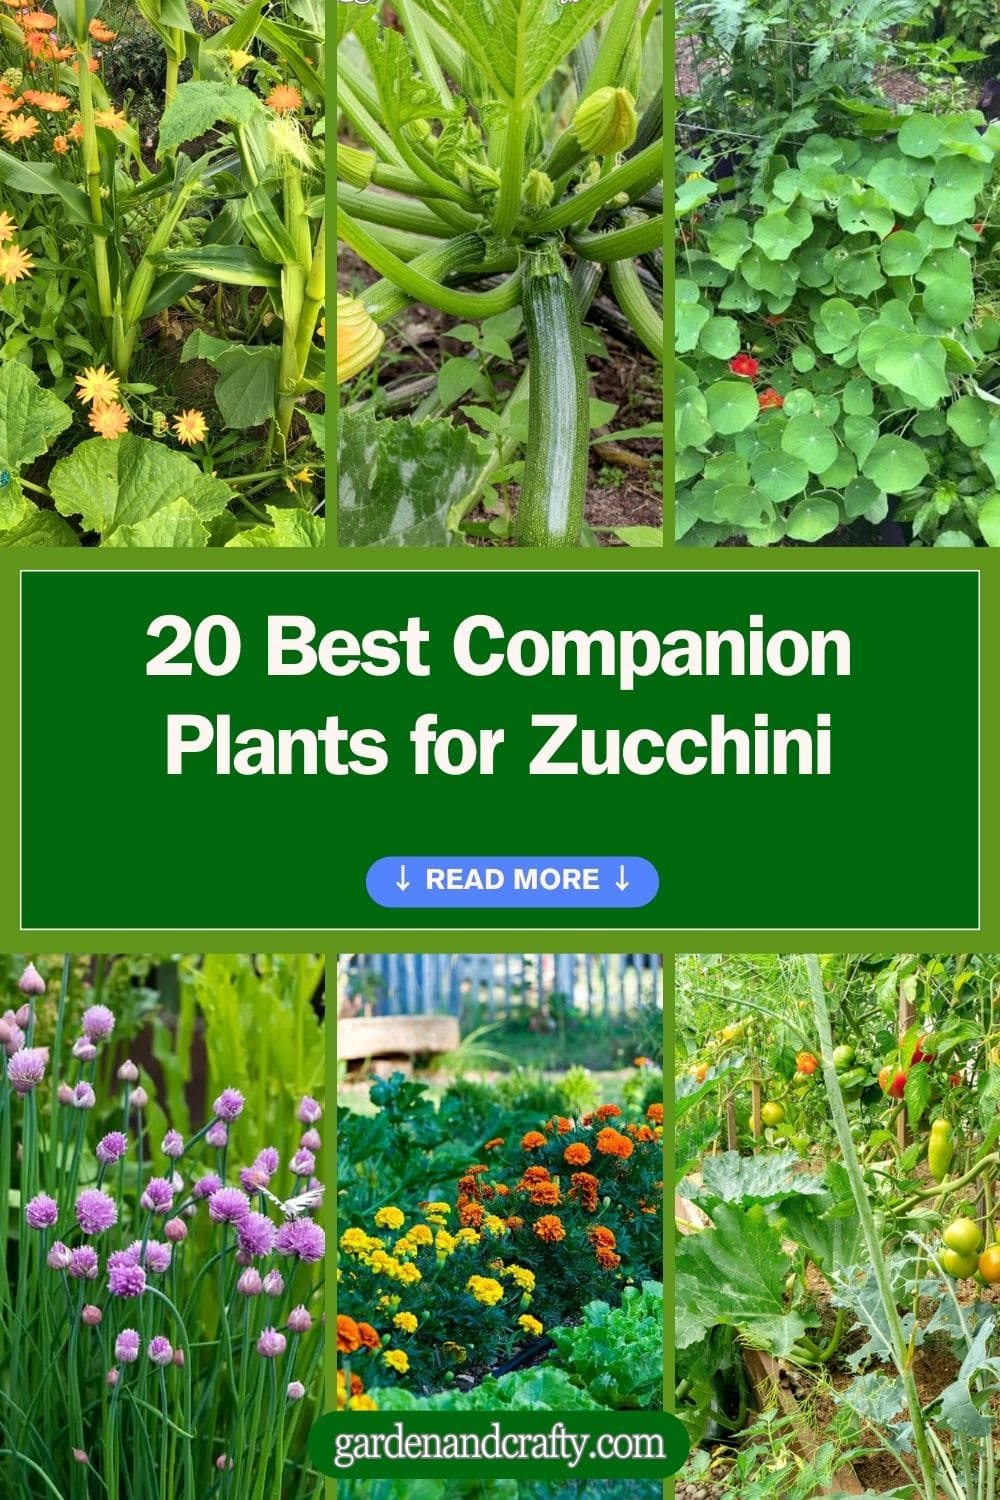 20 Best Companion Plants for Zucchini